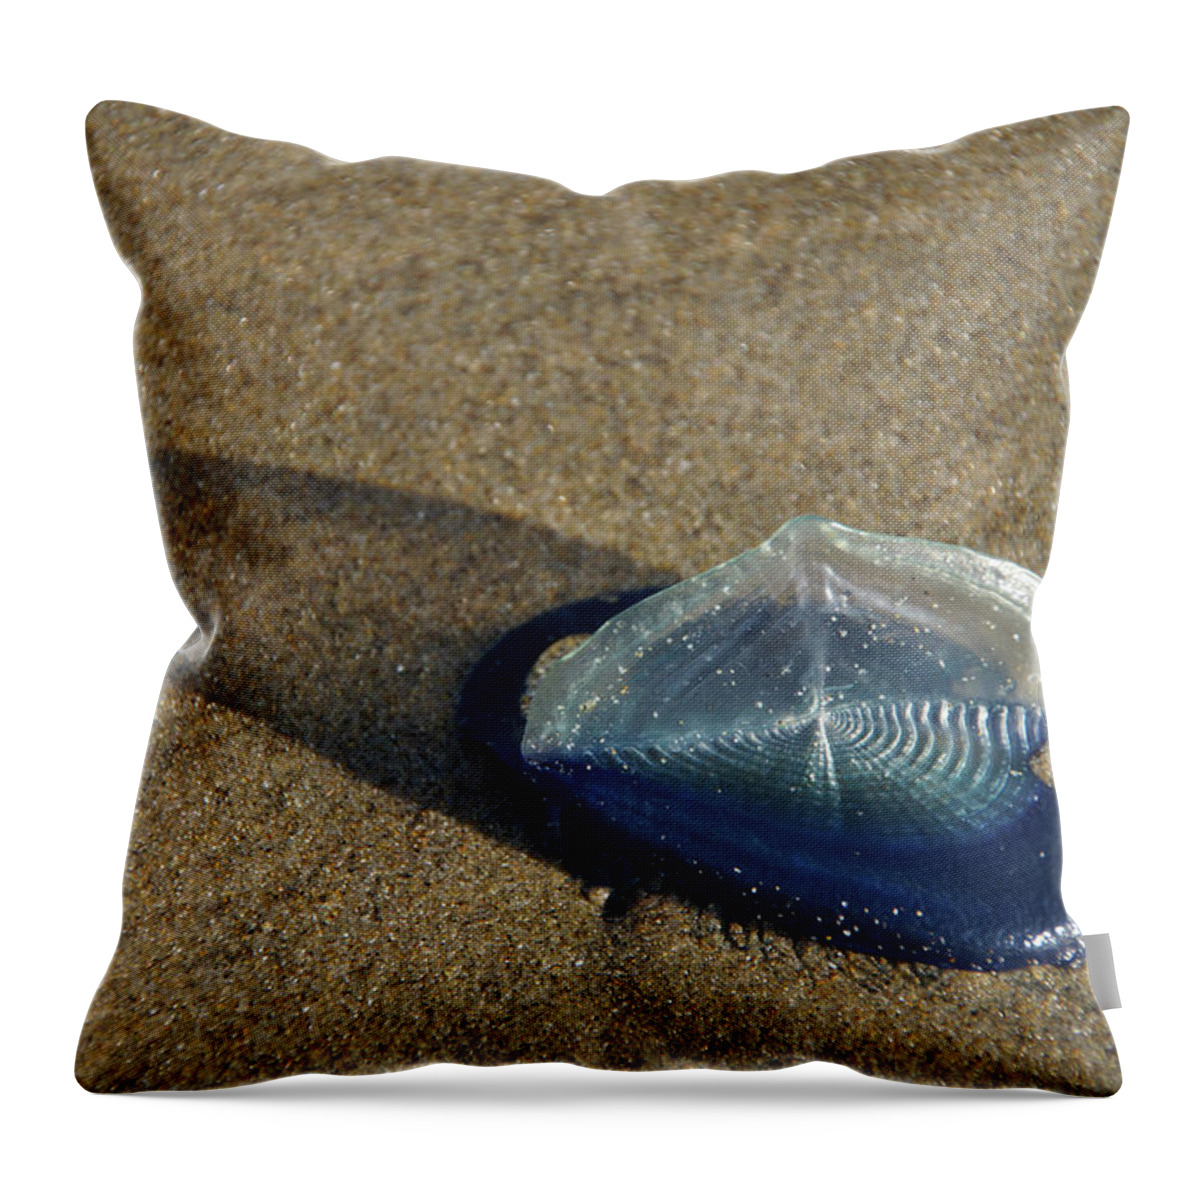 Blue Throw Pillow featuring the photograph Blue jellyfish by Steve Estvanik